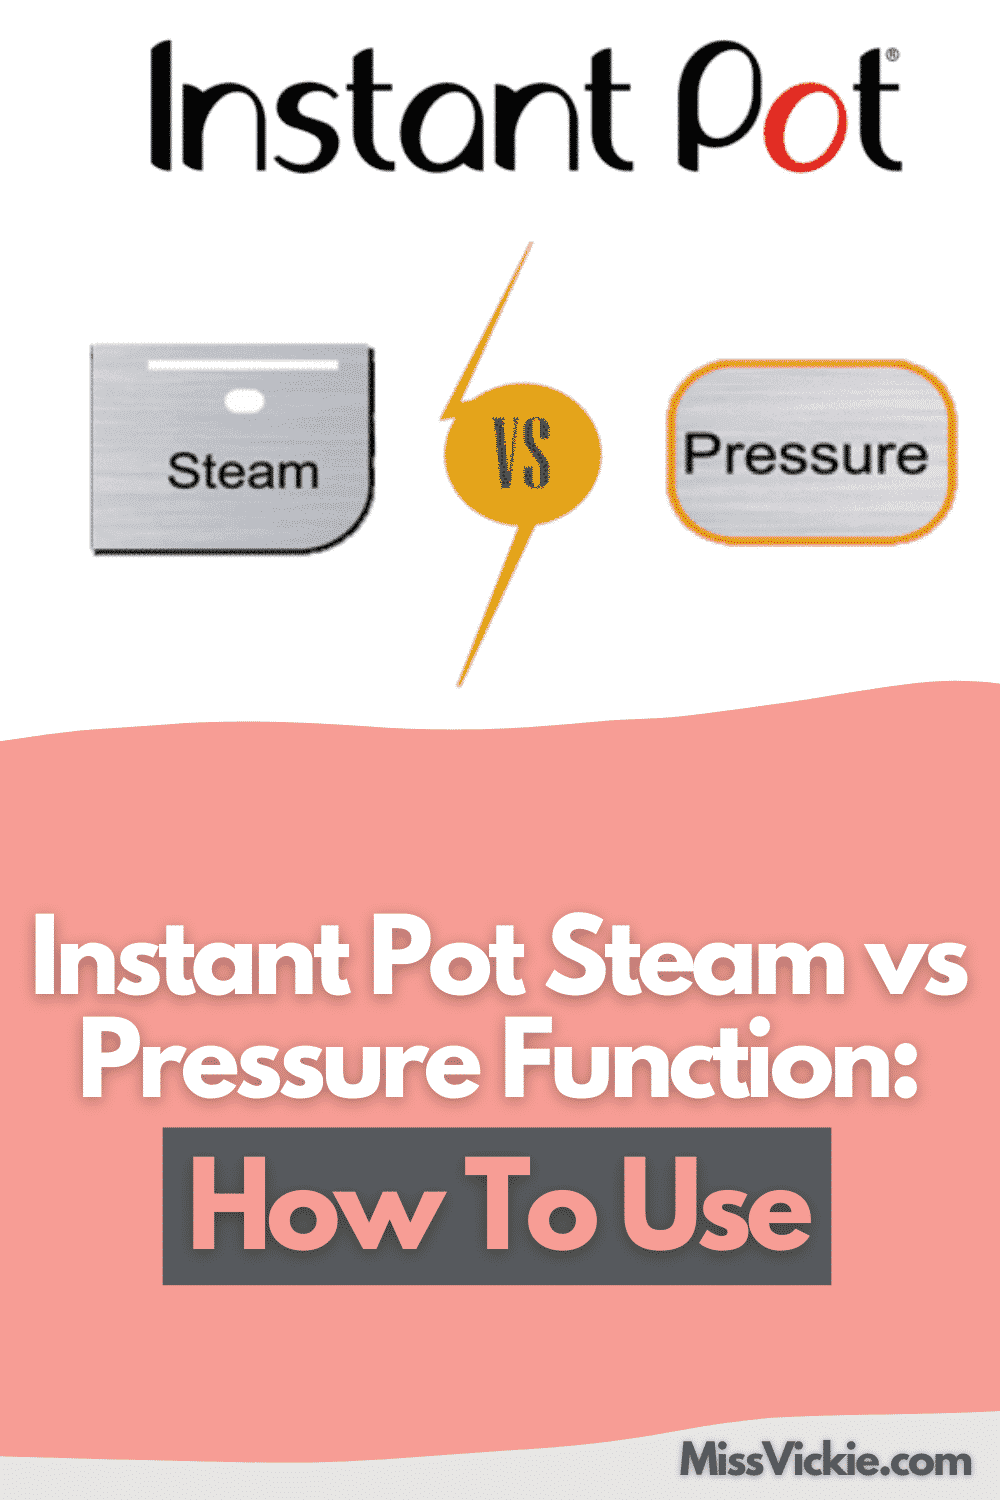 Instant Pot Steam vs Pressure Function